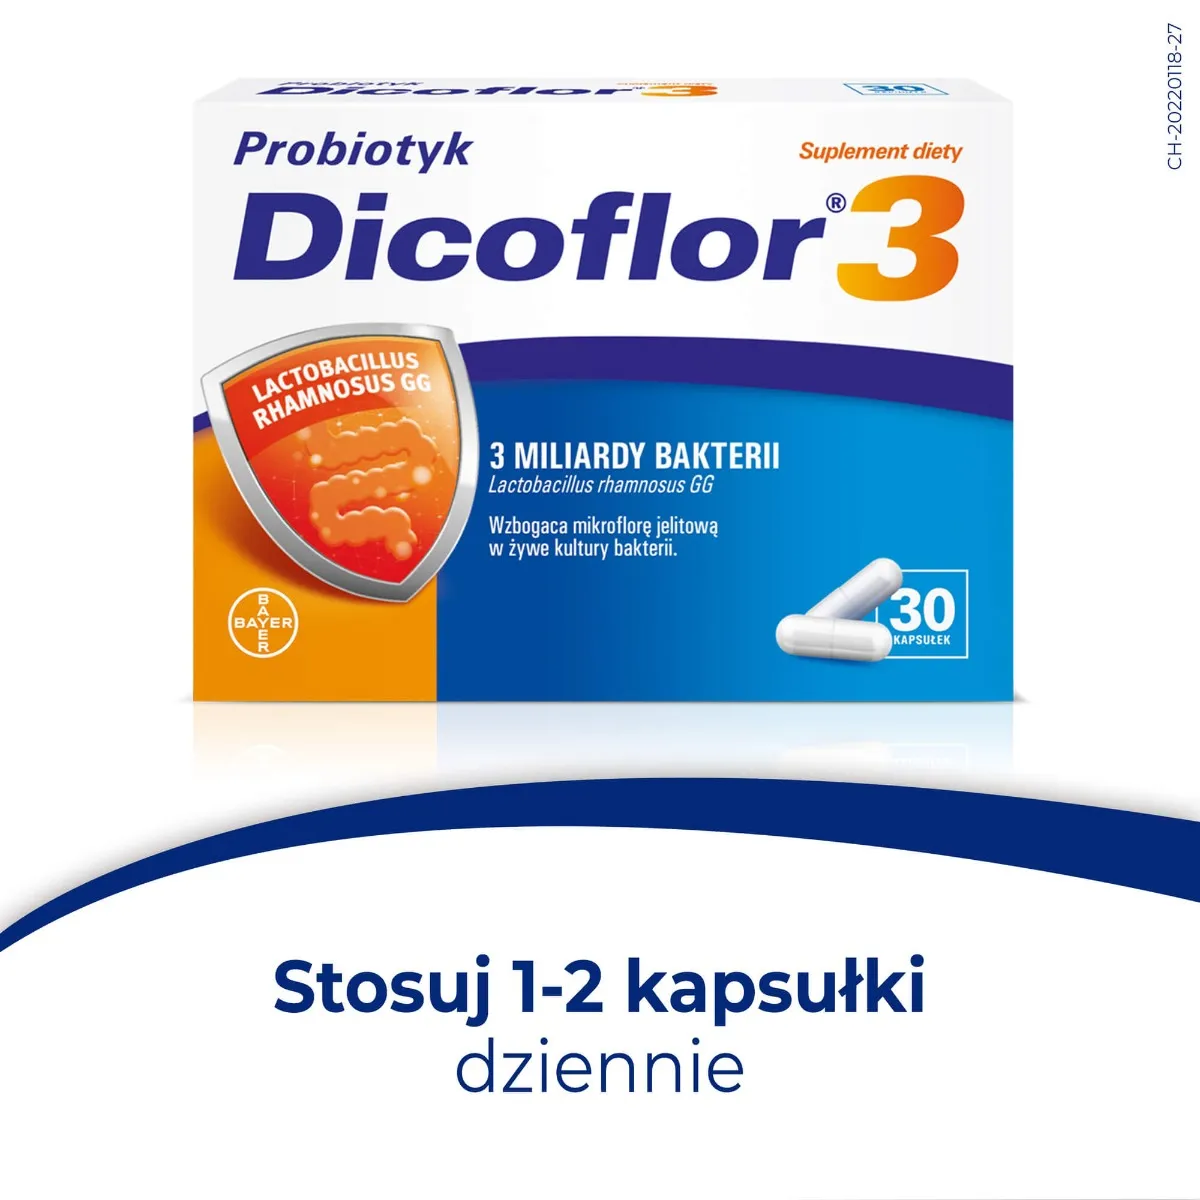 Dicoflor 3, suplement diety, 30 kapsułek 